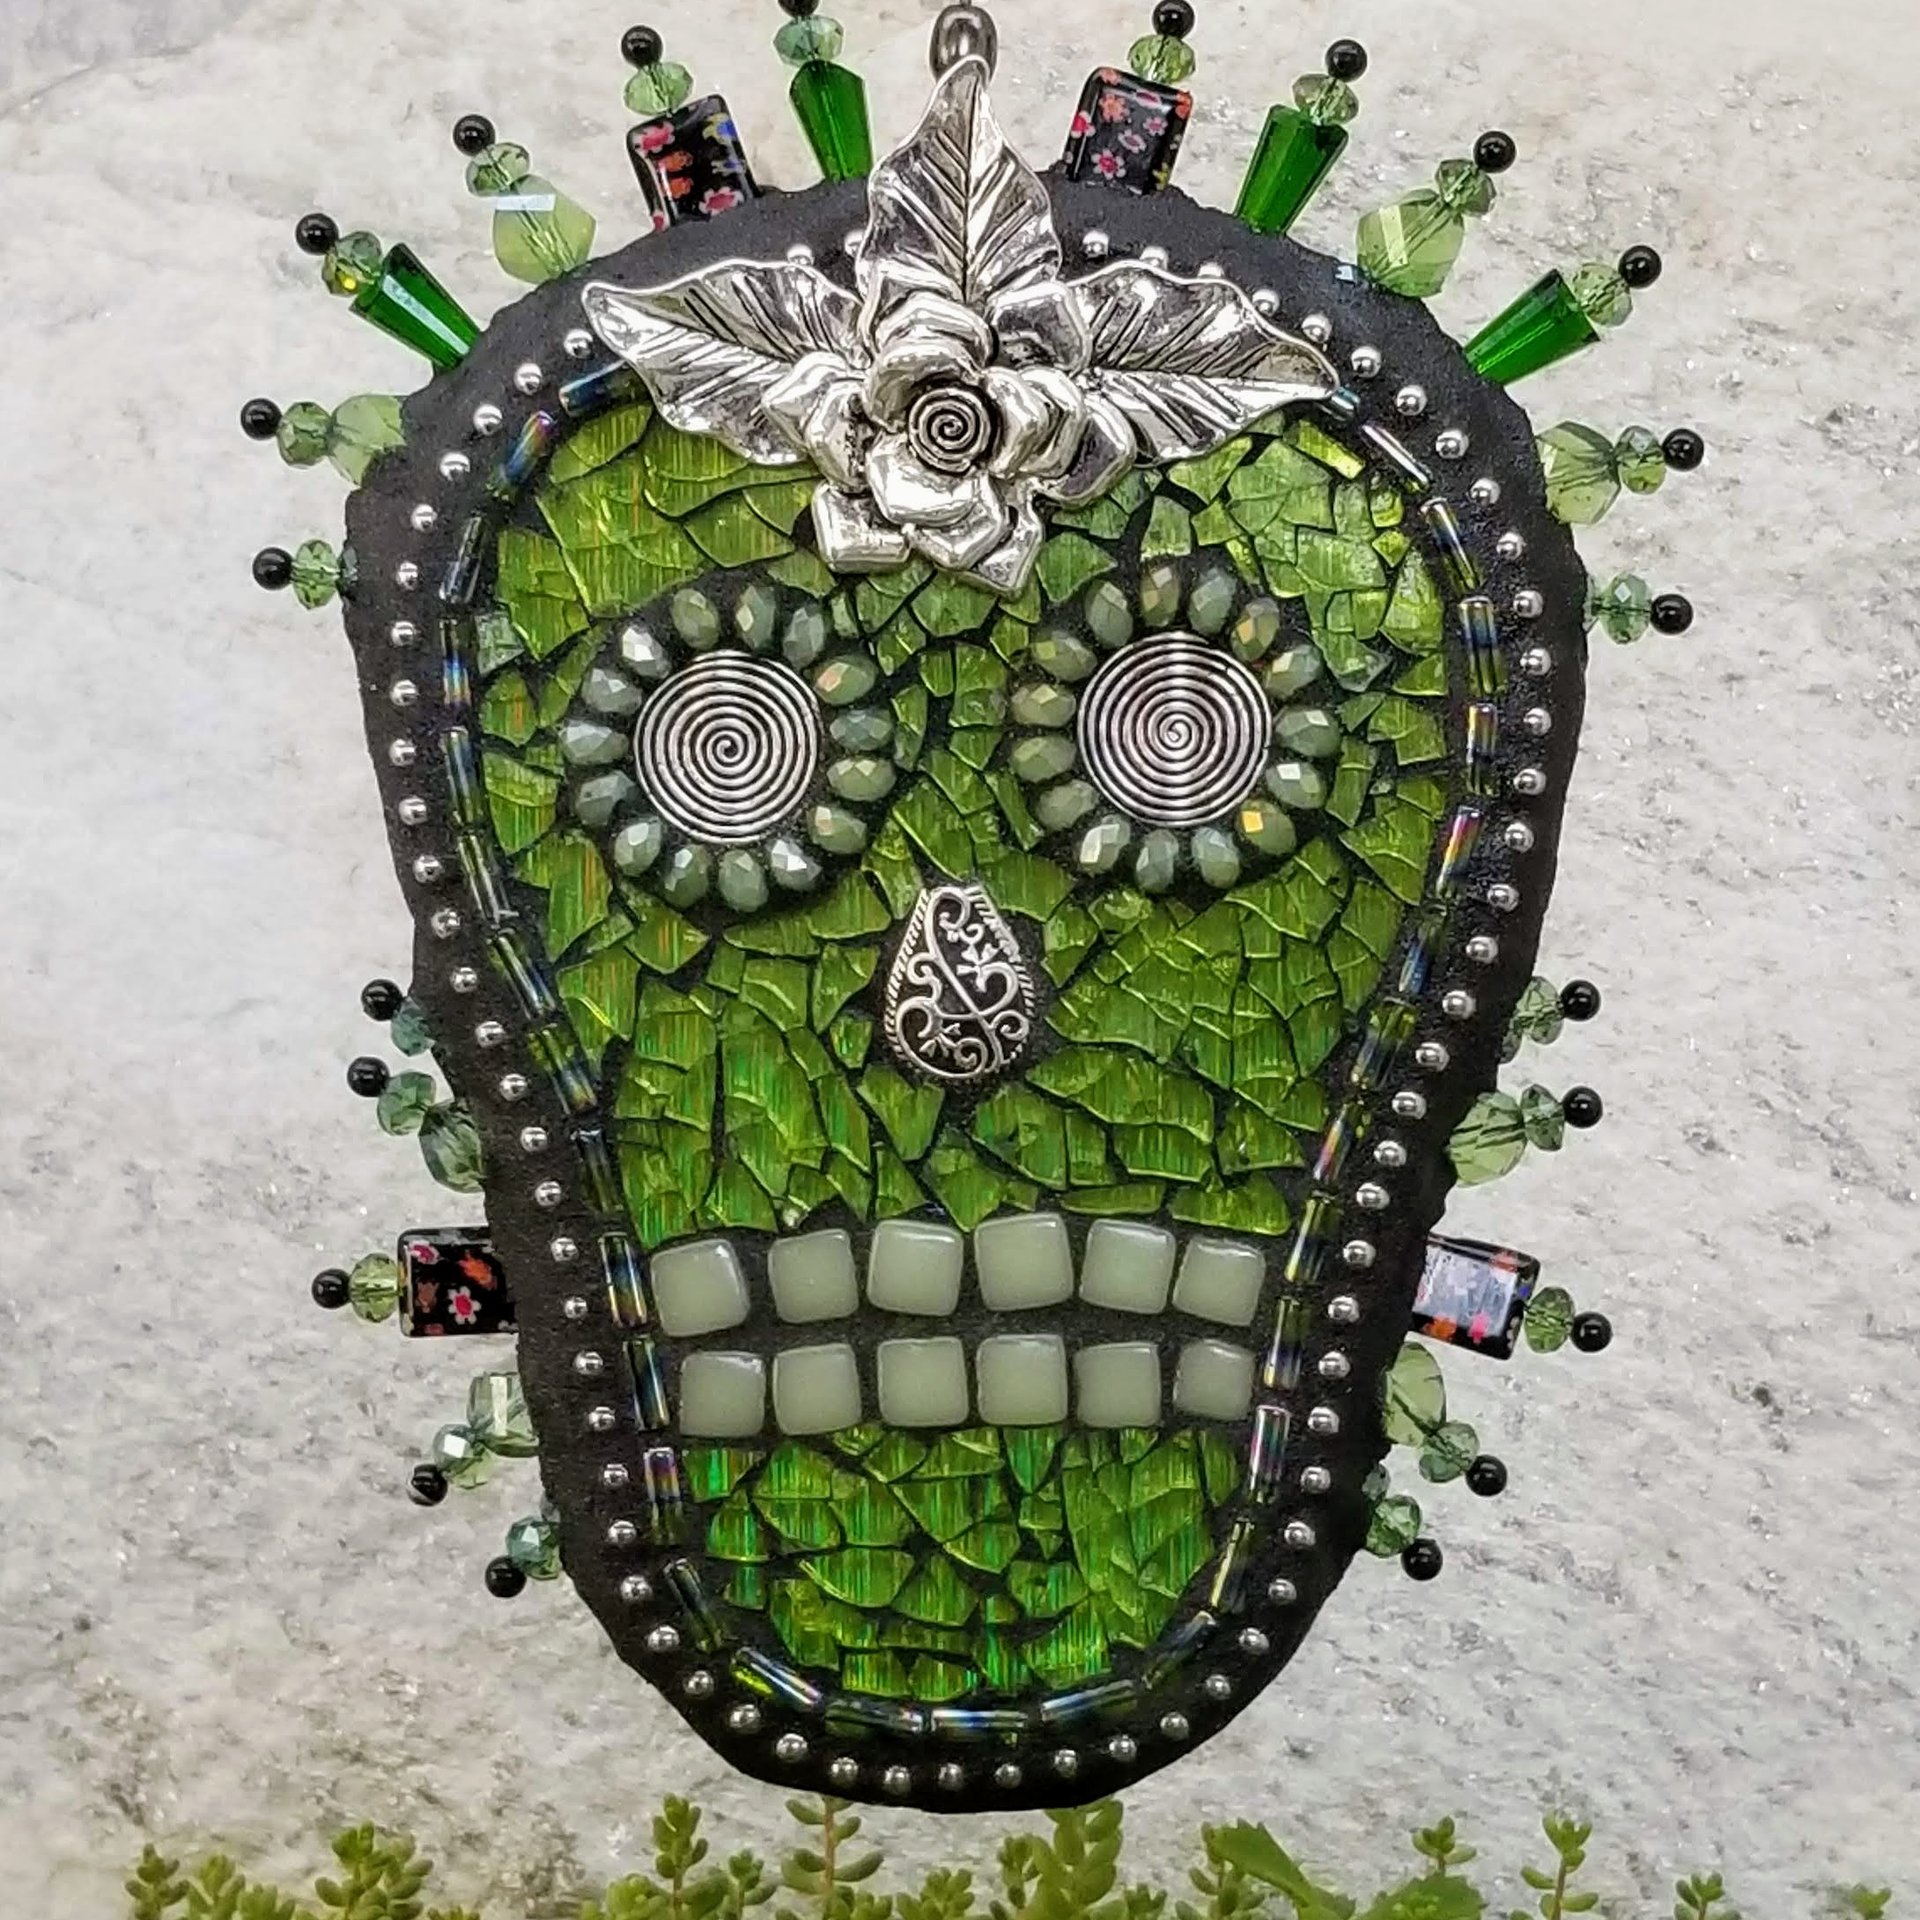 Skull in Green Mosaic Garden Wind Spinner, Home and Garden Decor, Gardening Gift,